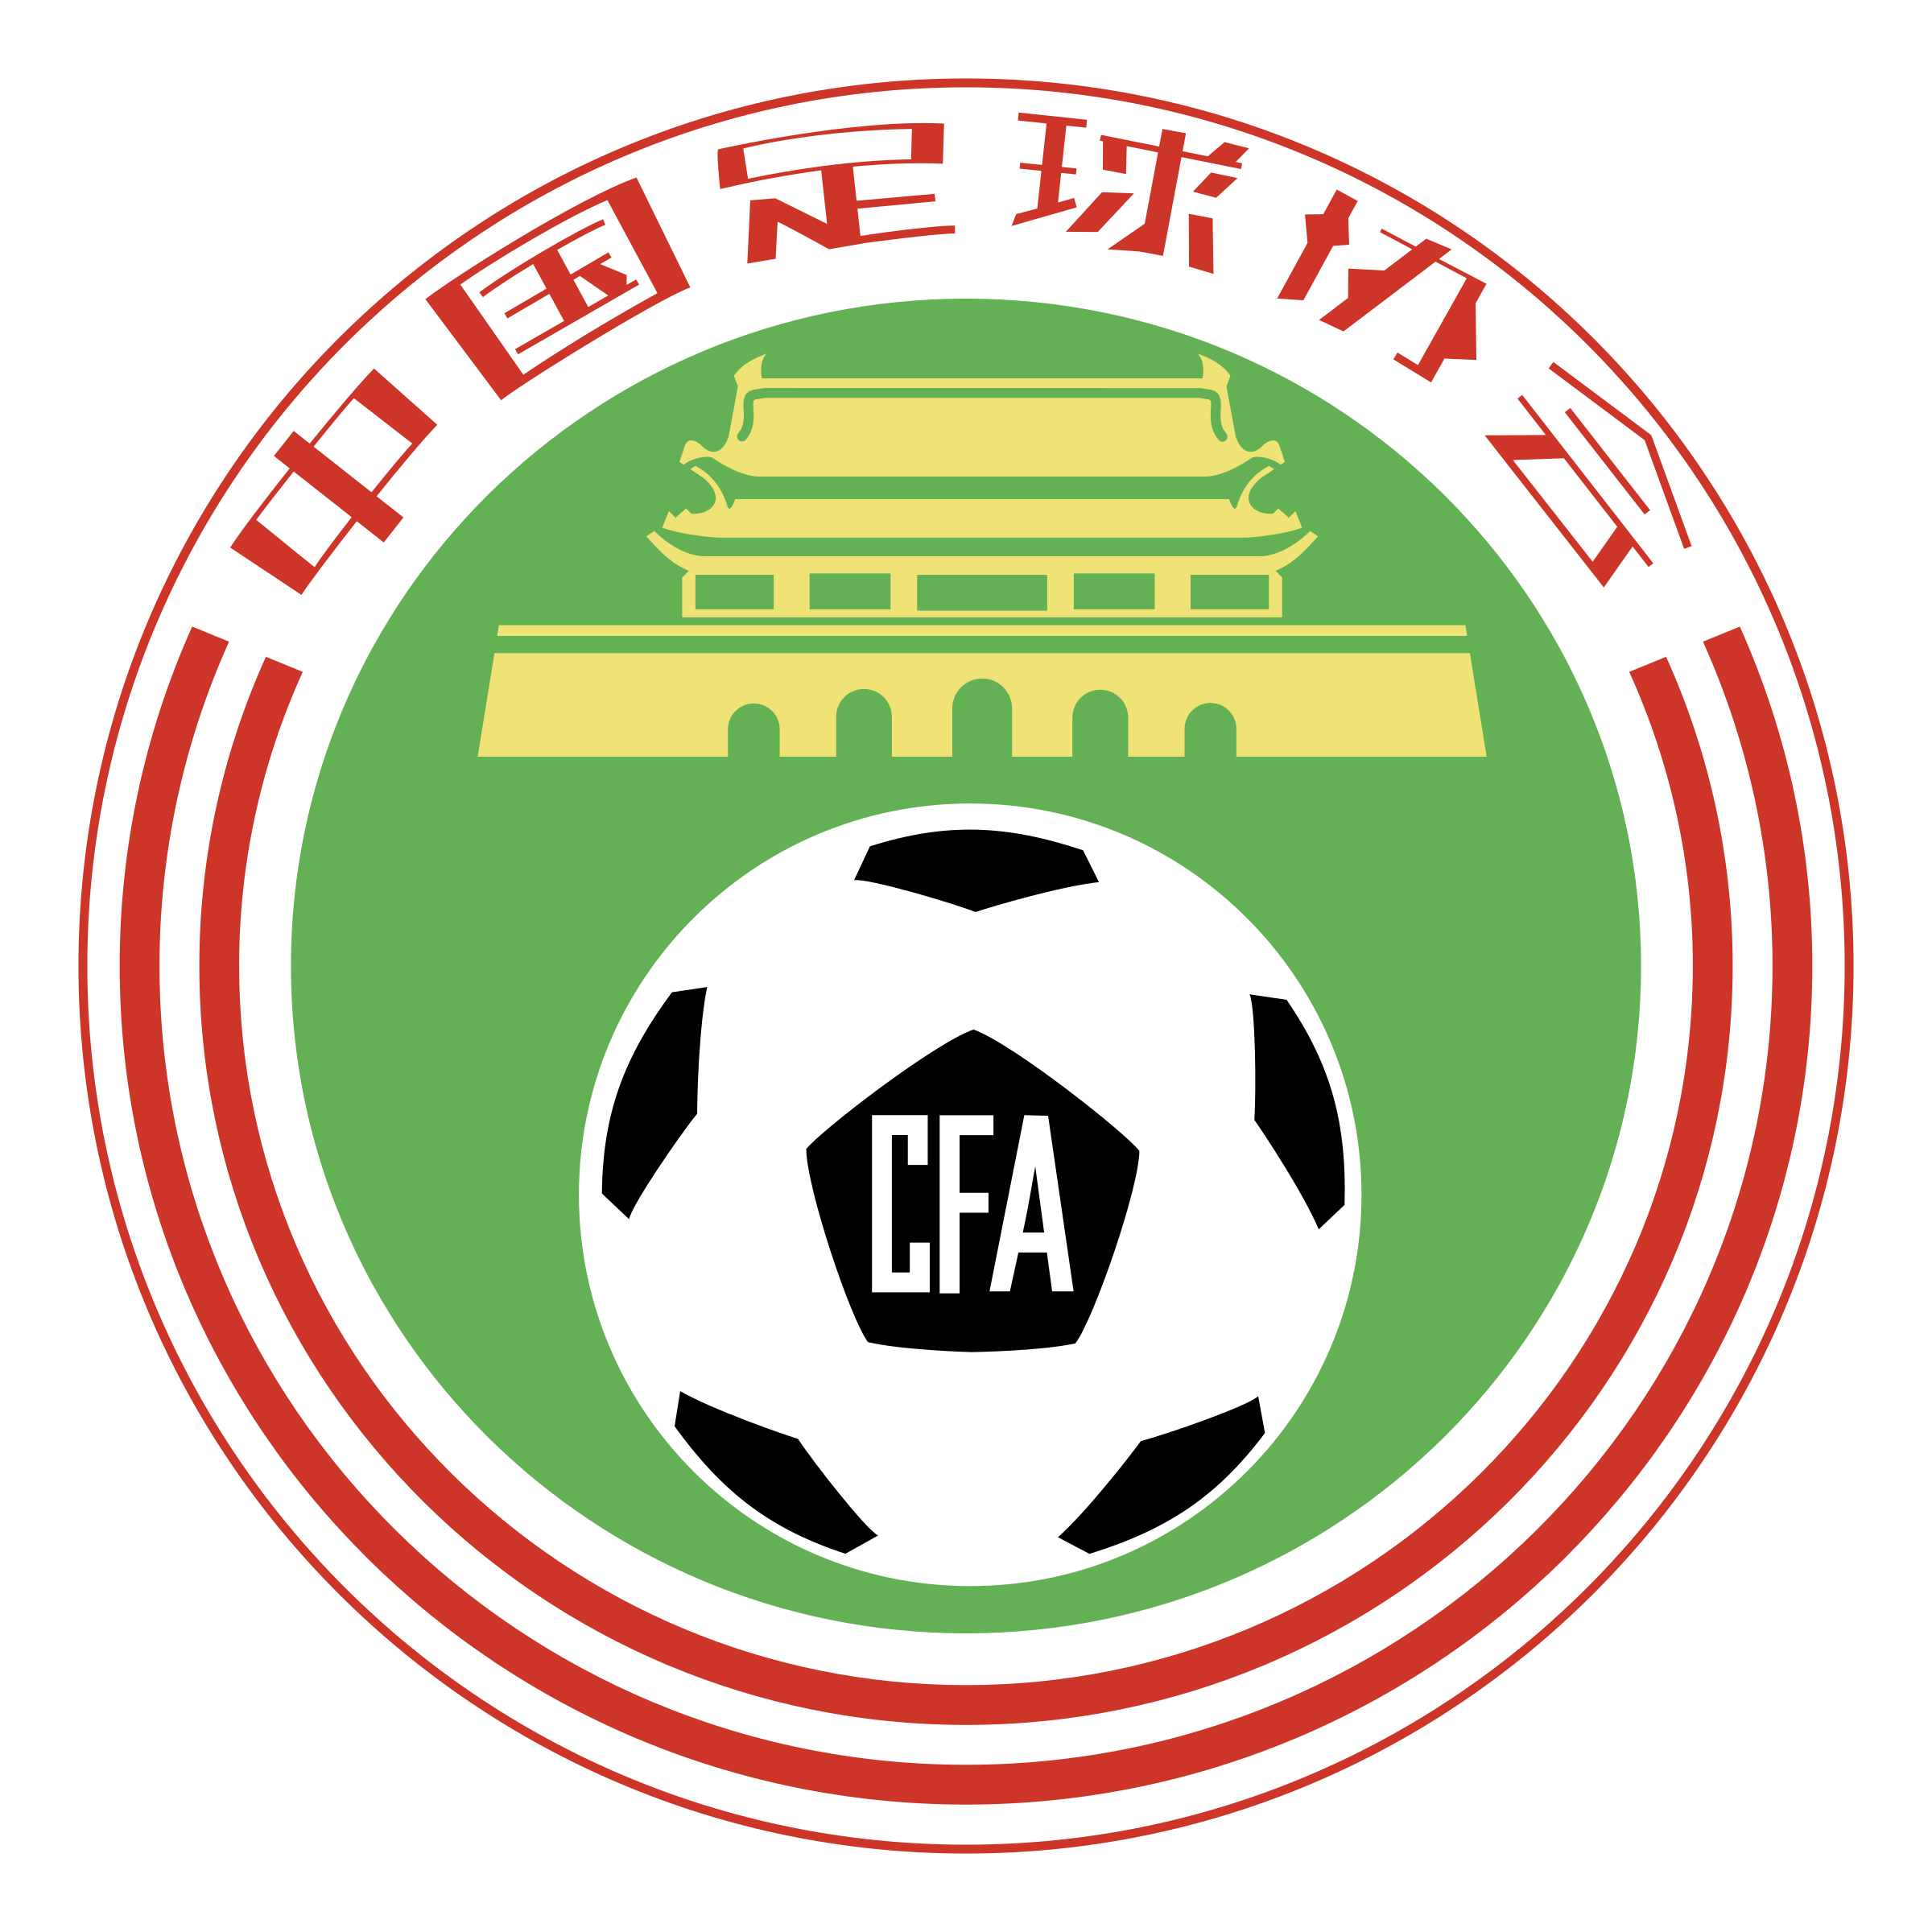 CFA Logo PNG Transparent & SVG Vector.